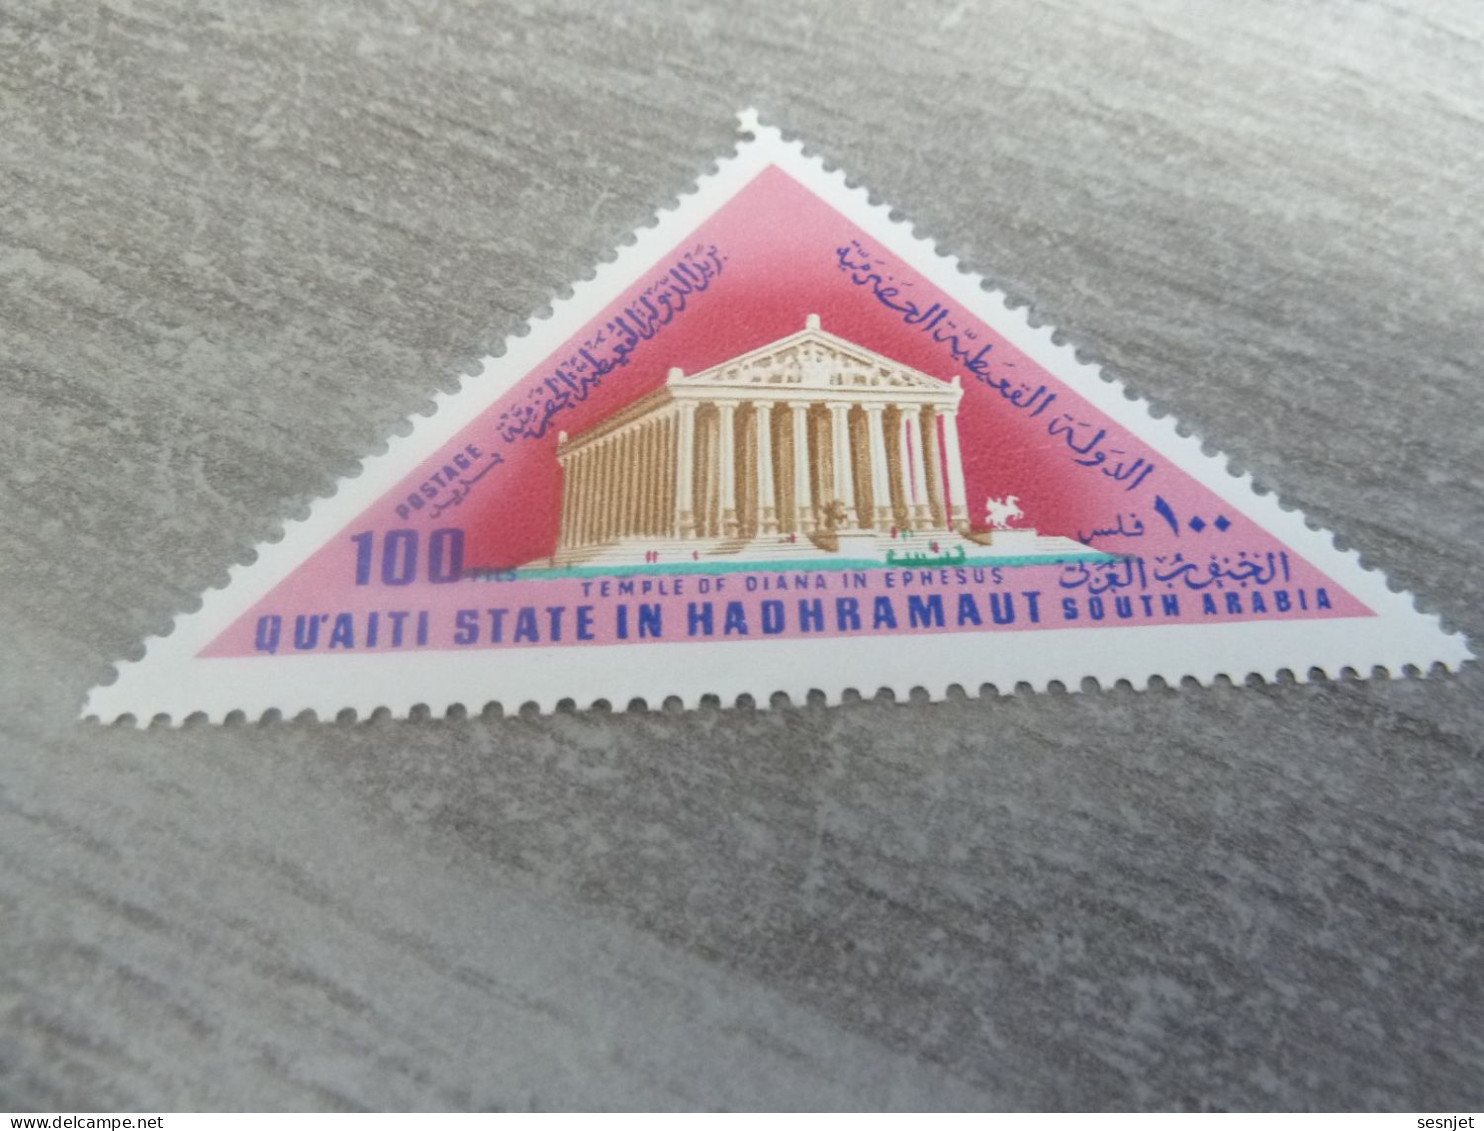 Qu'aiti State In Hadhramaut - Temple Of Diana In Ephesus - Val 100 Fils - Postage - Multicolore - Neuf - - Mythologie